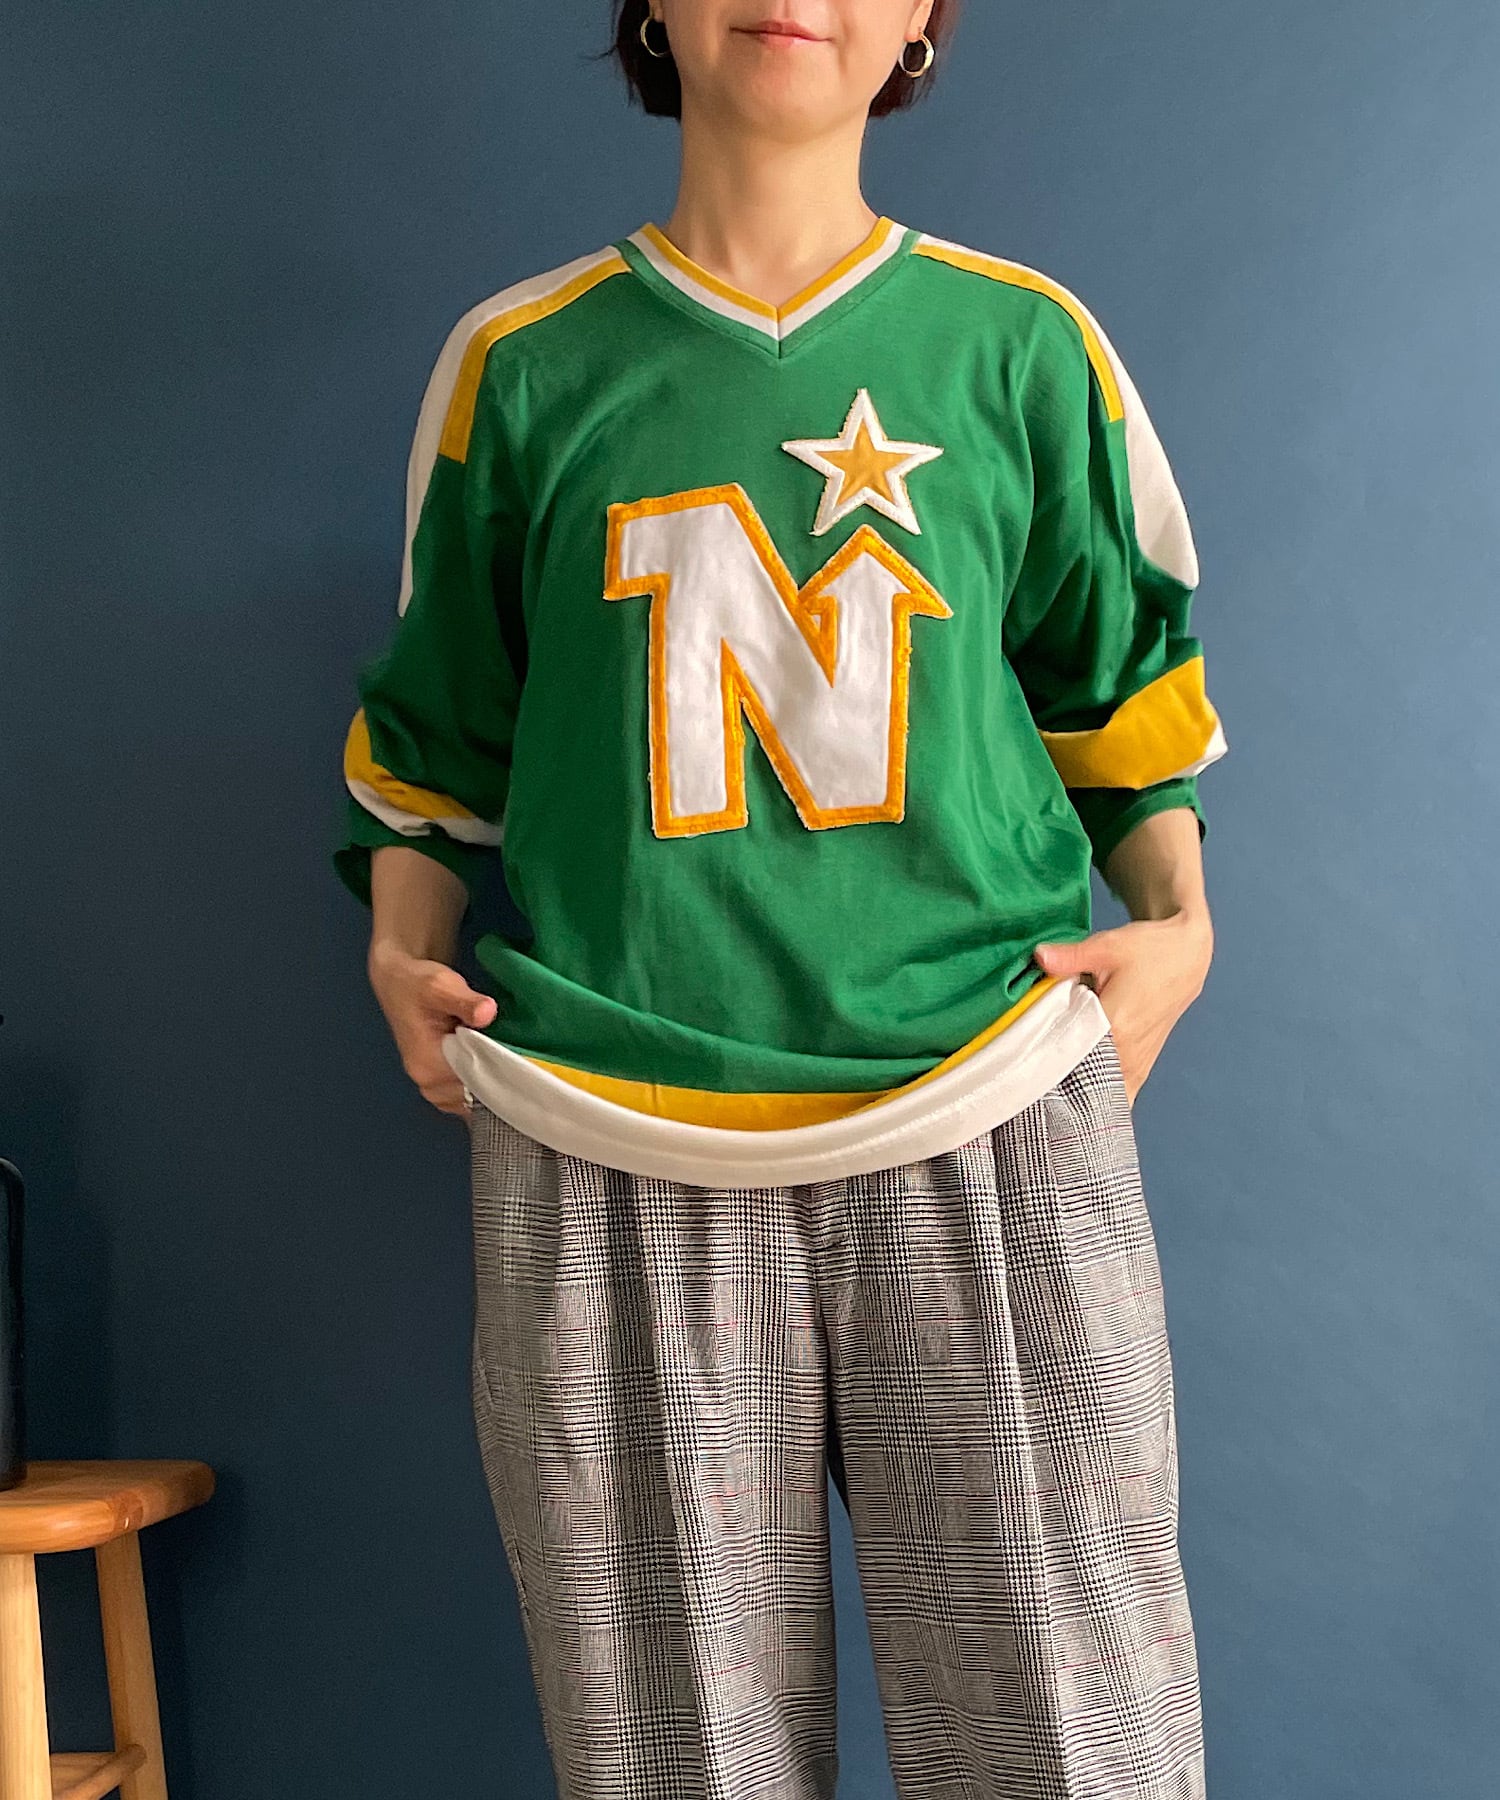 SK Sandow Sporting Knit Minnesota North Stars Green Hockey ...